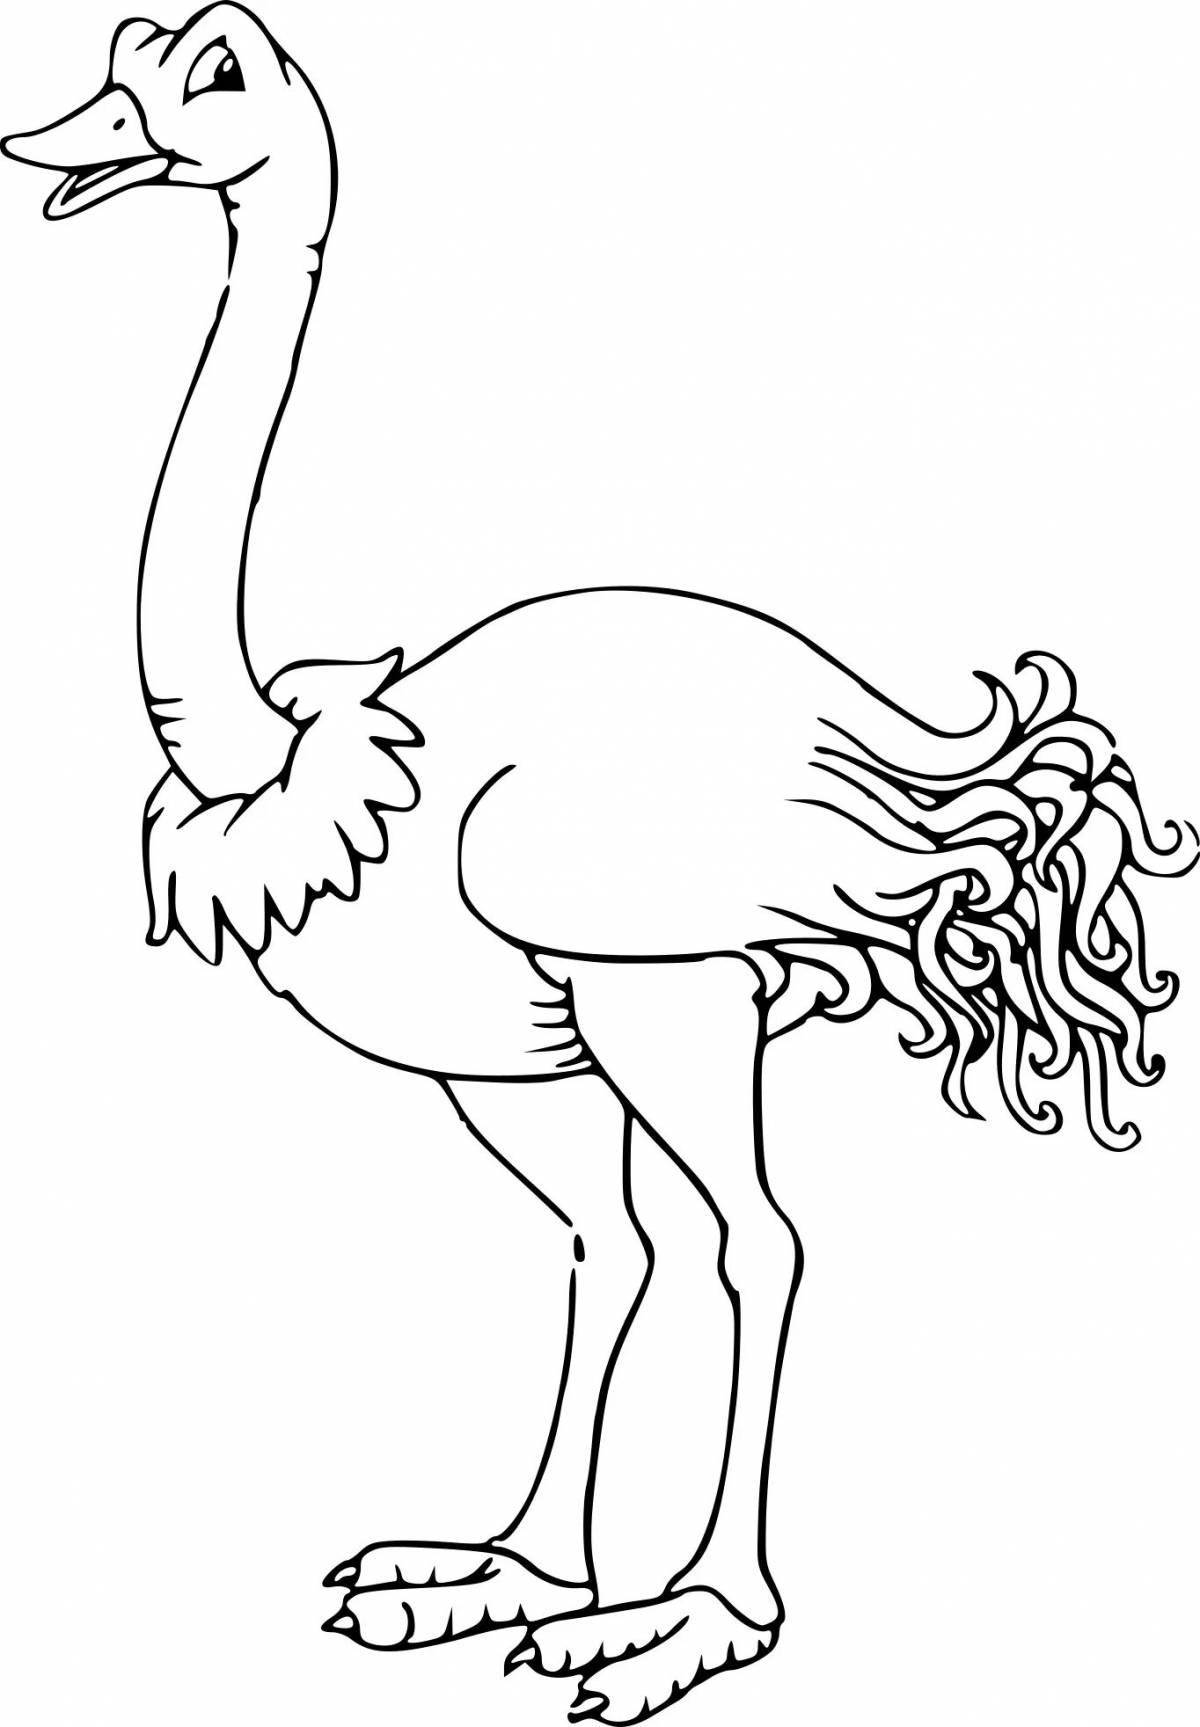 Fun emu coloring book for kids